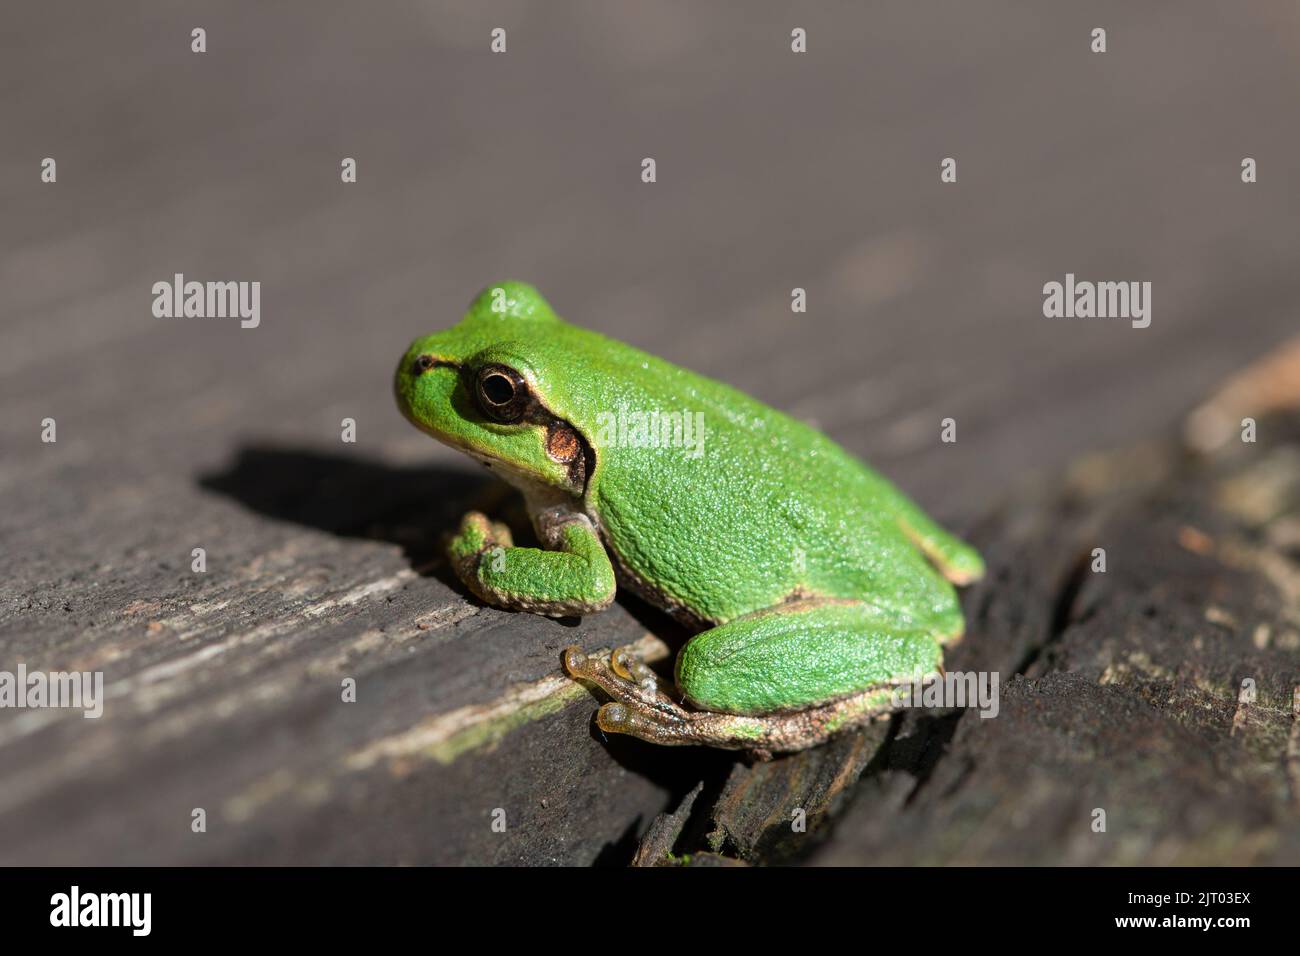 Green Japanese tree frog on wood Stock Photo